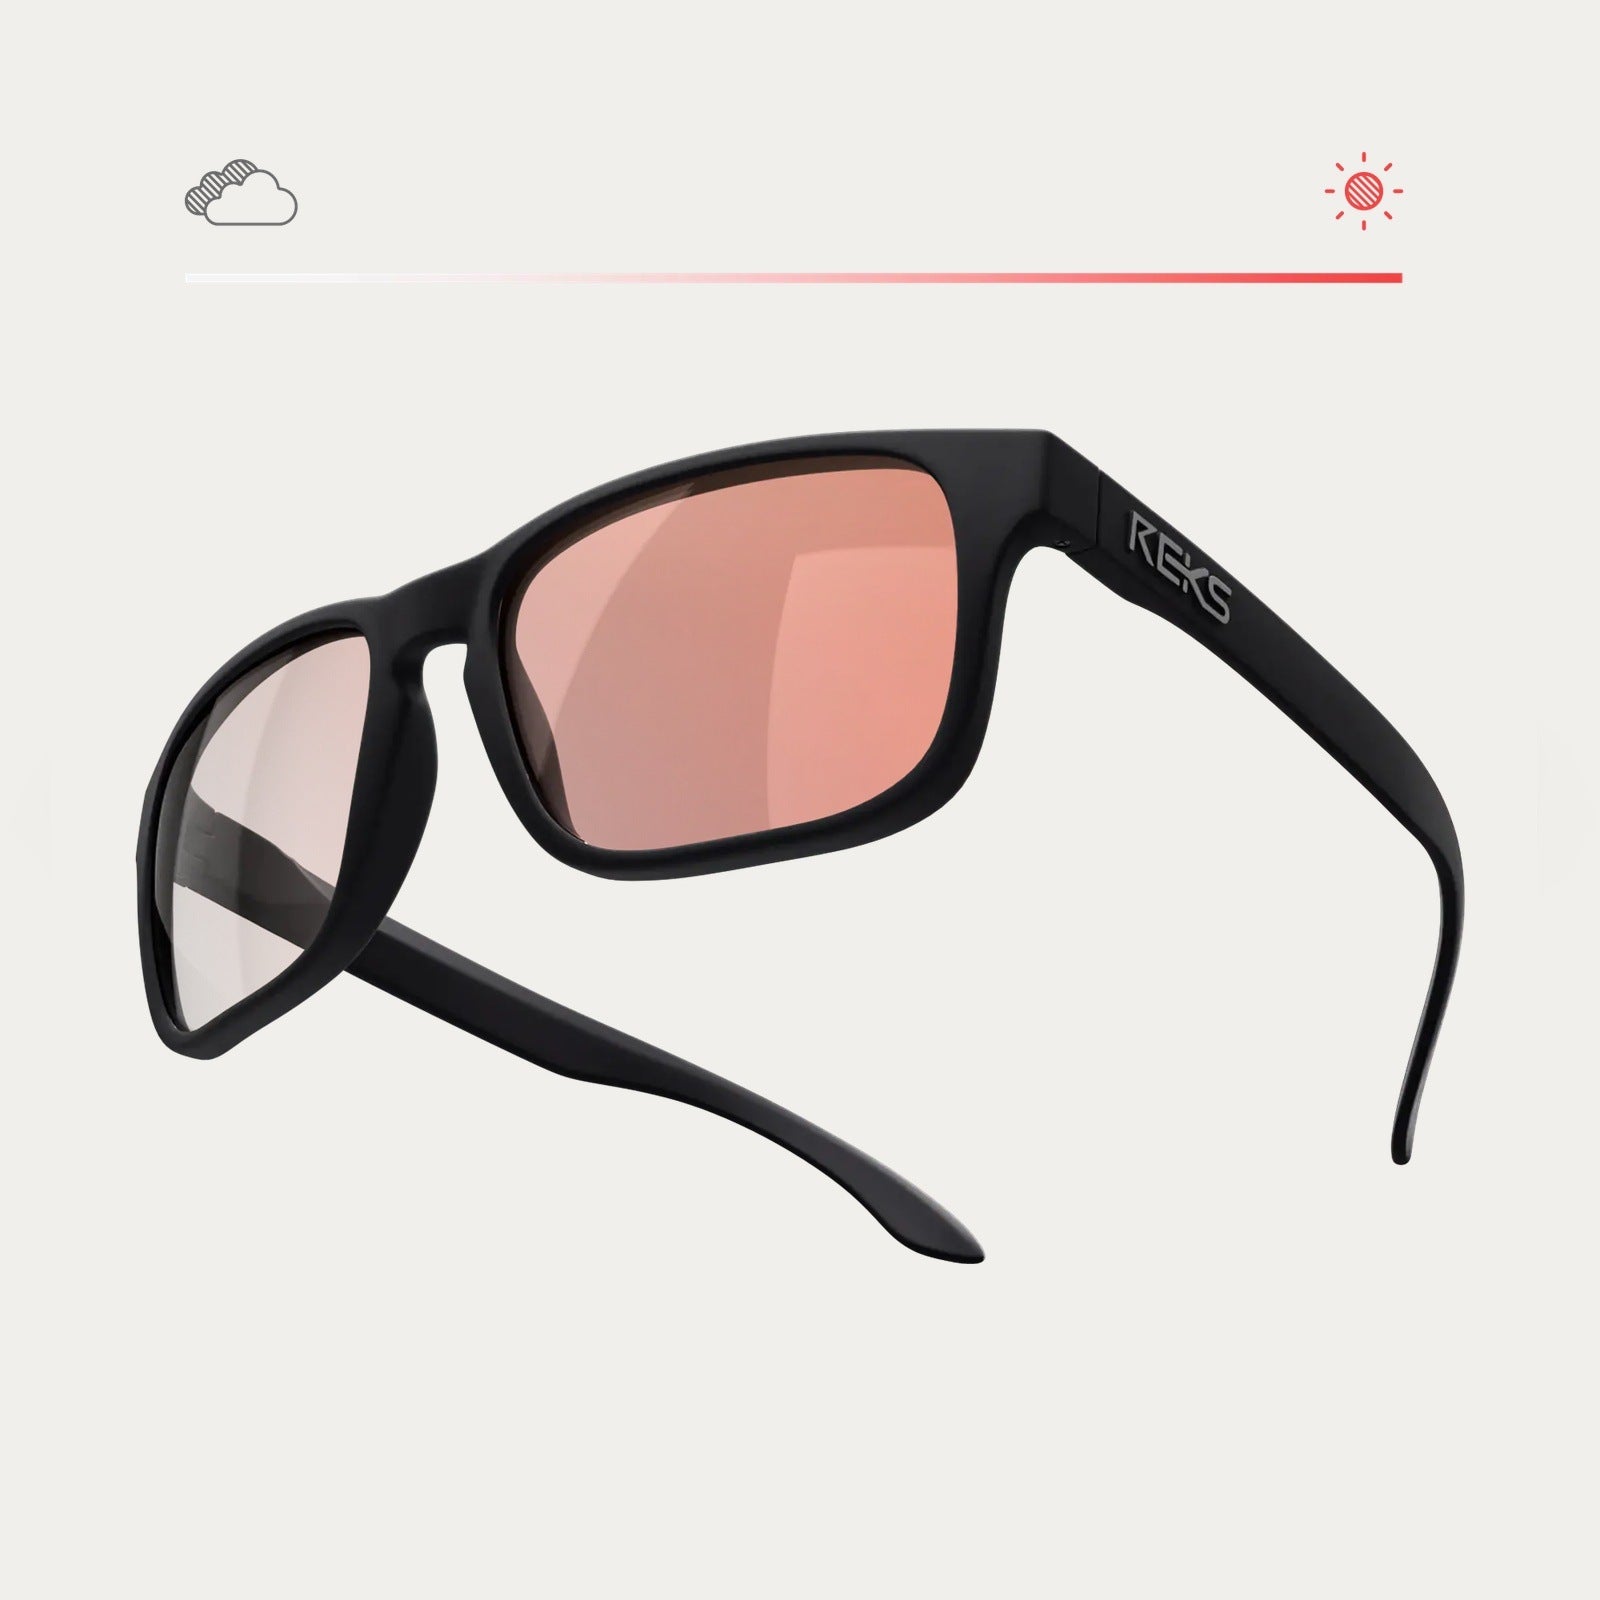 Reks | Sport Trivex Color Boosting Unbreakable Sunglasses Photochromic Lens